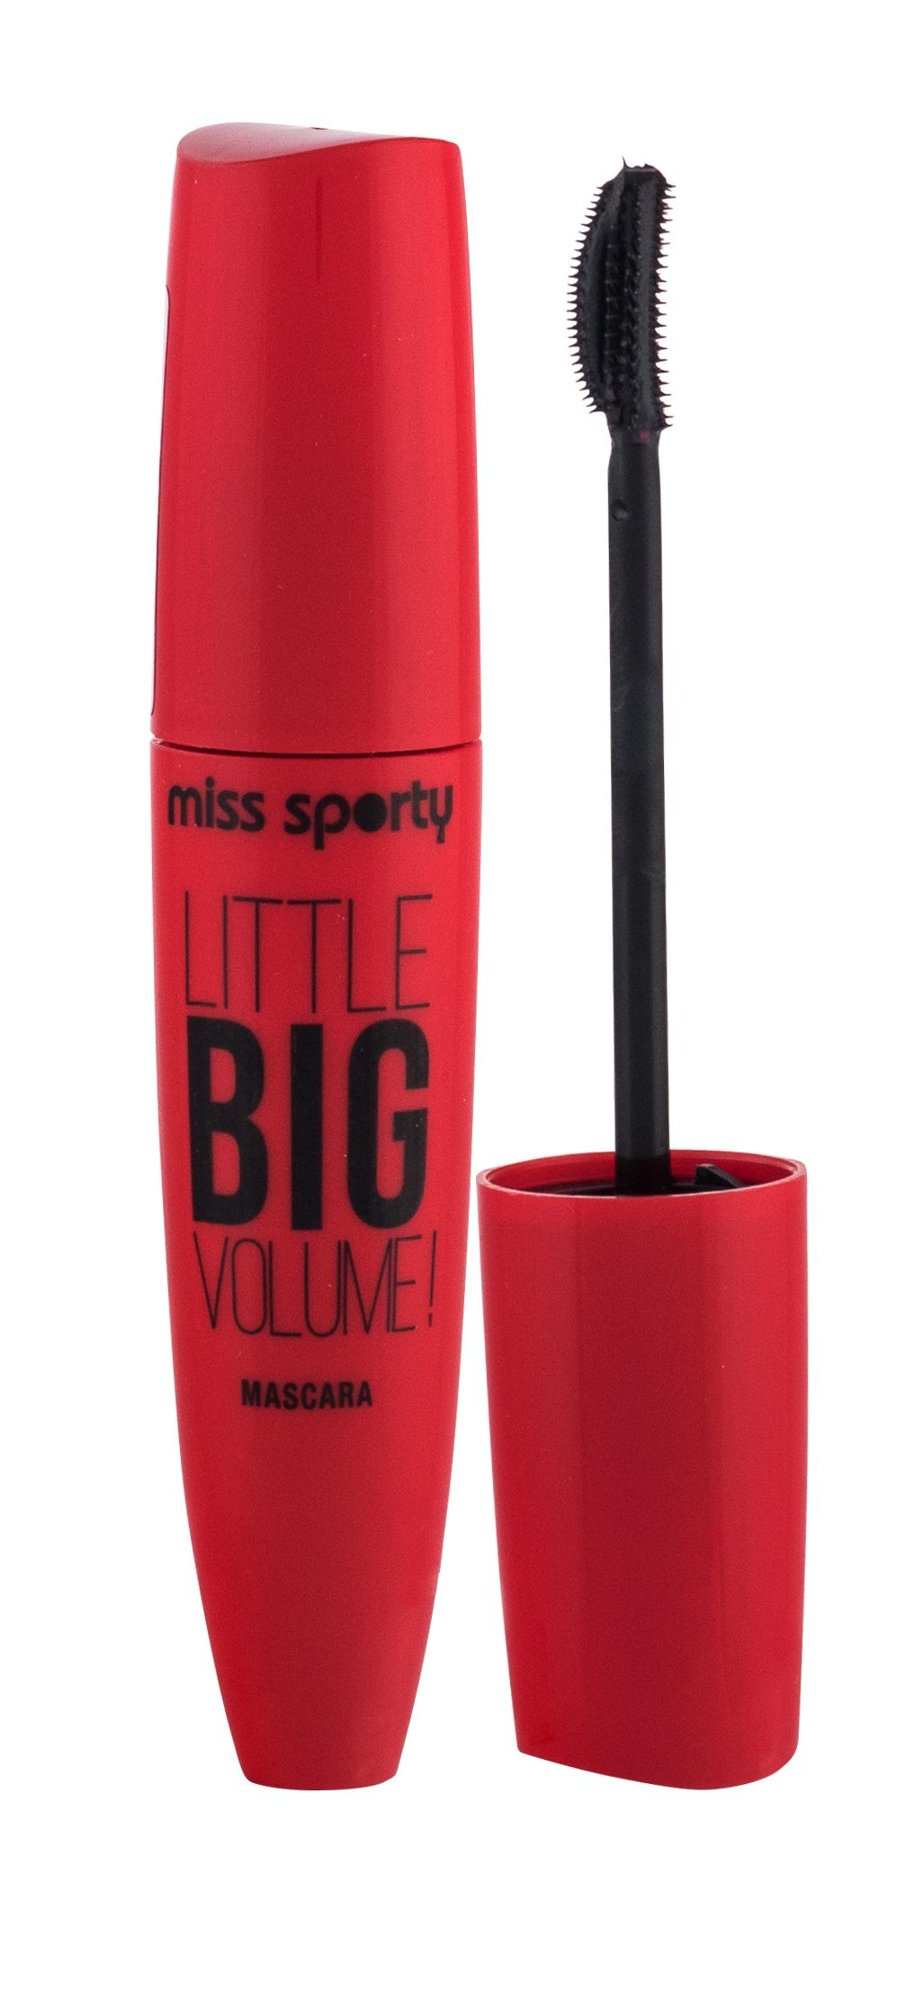 Miss Sporty Little Big Volume!